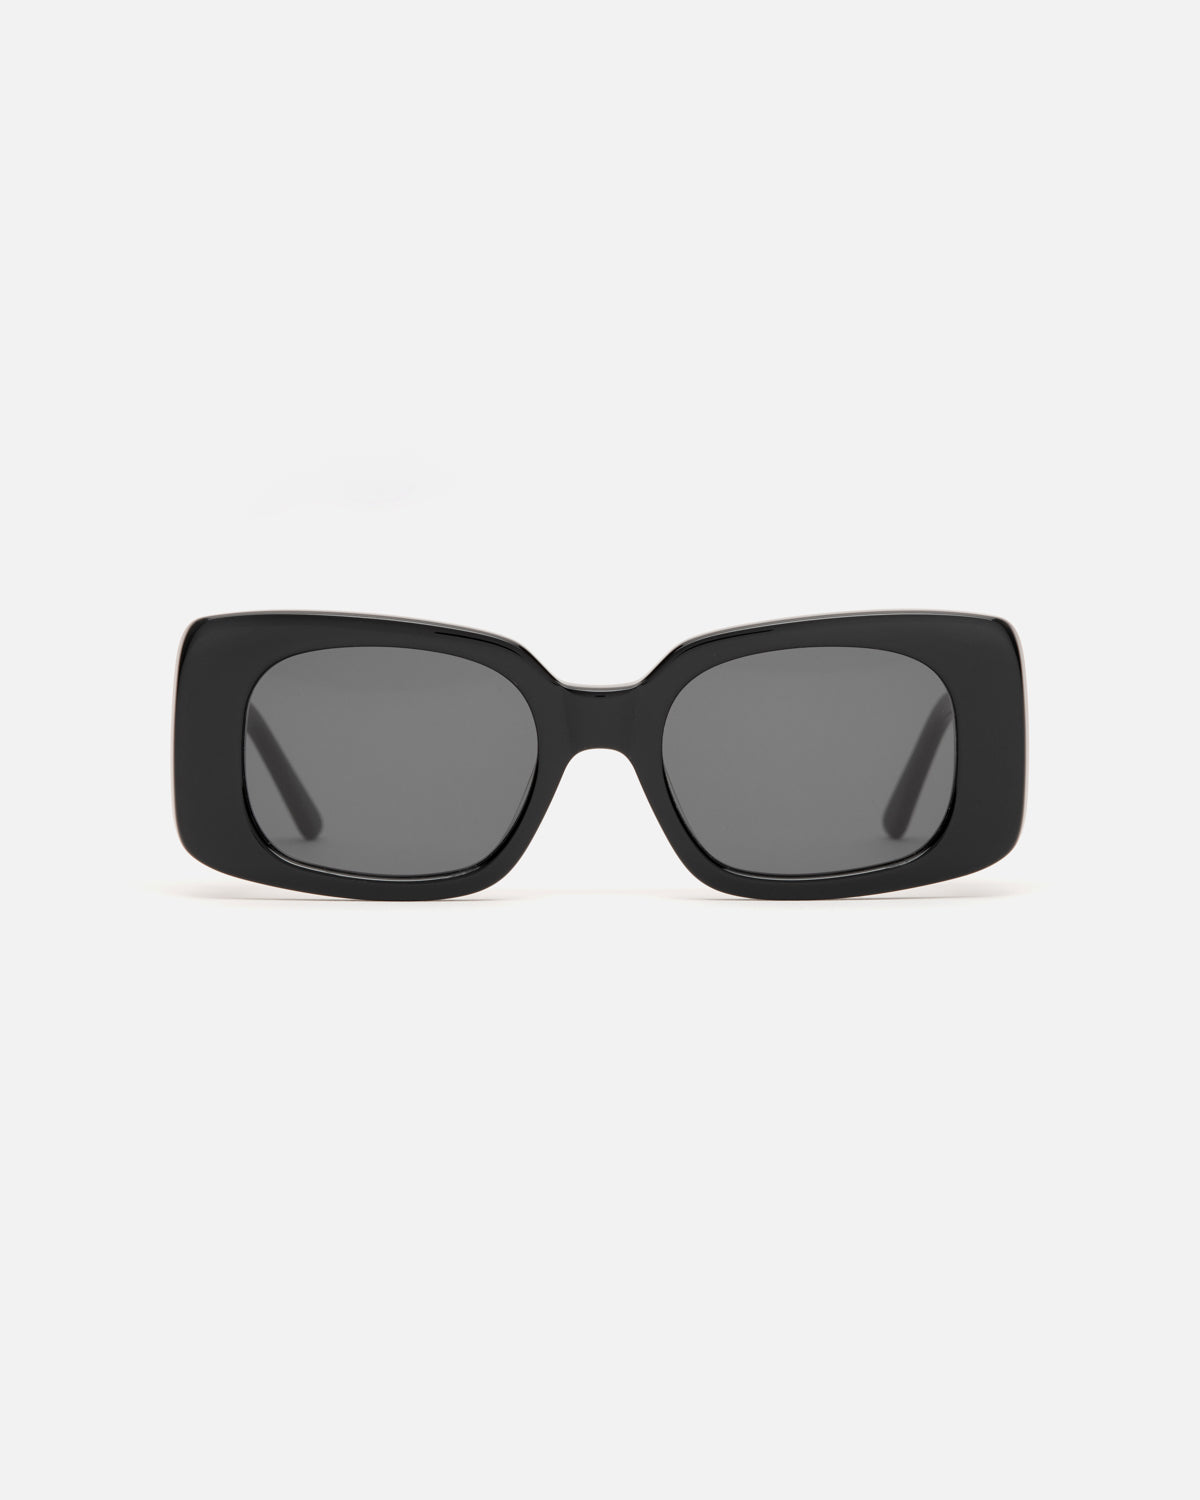 Lu Goldie Coco square Sunglasses in black acetate with black lenses, front